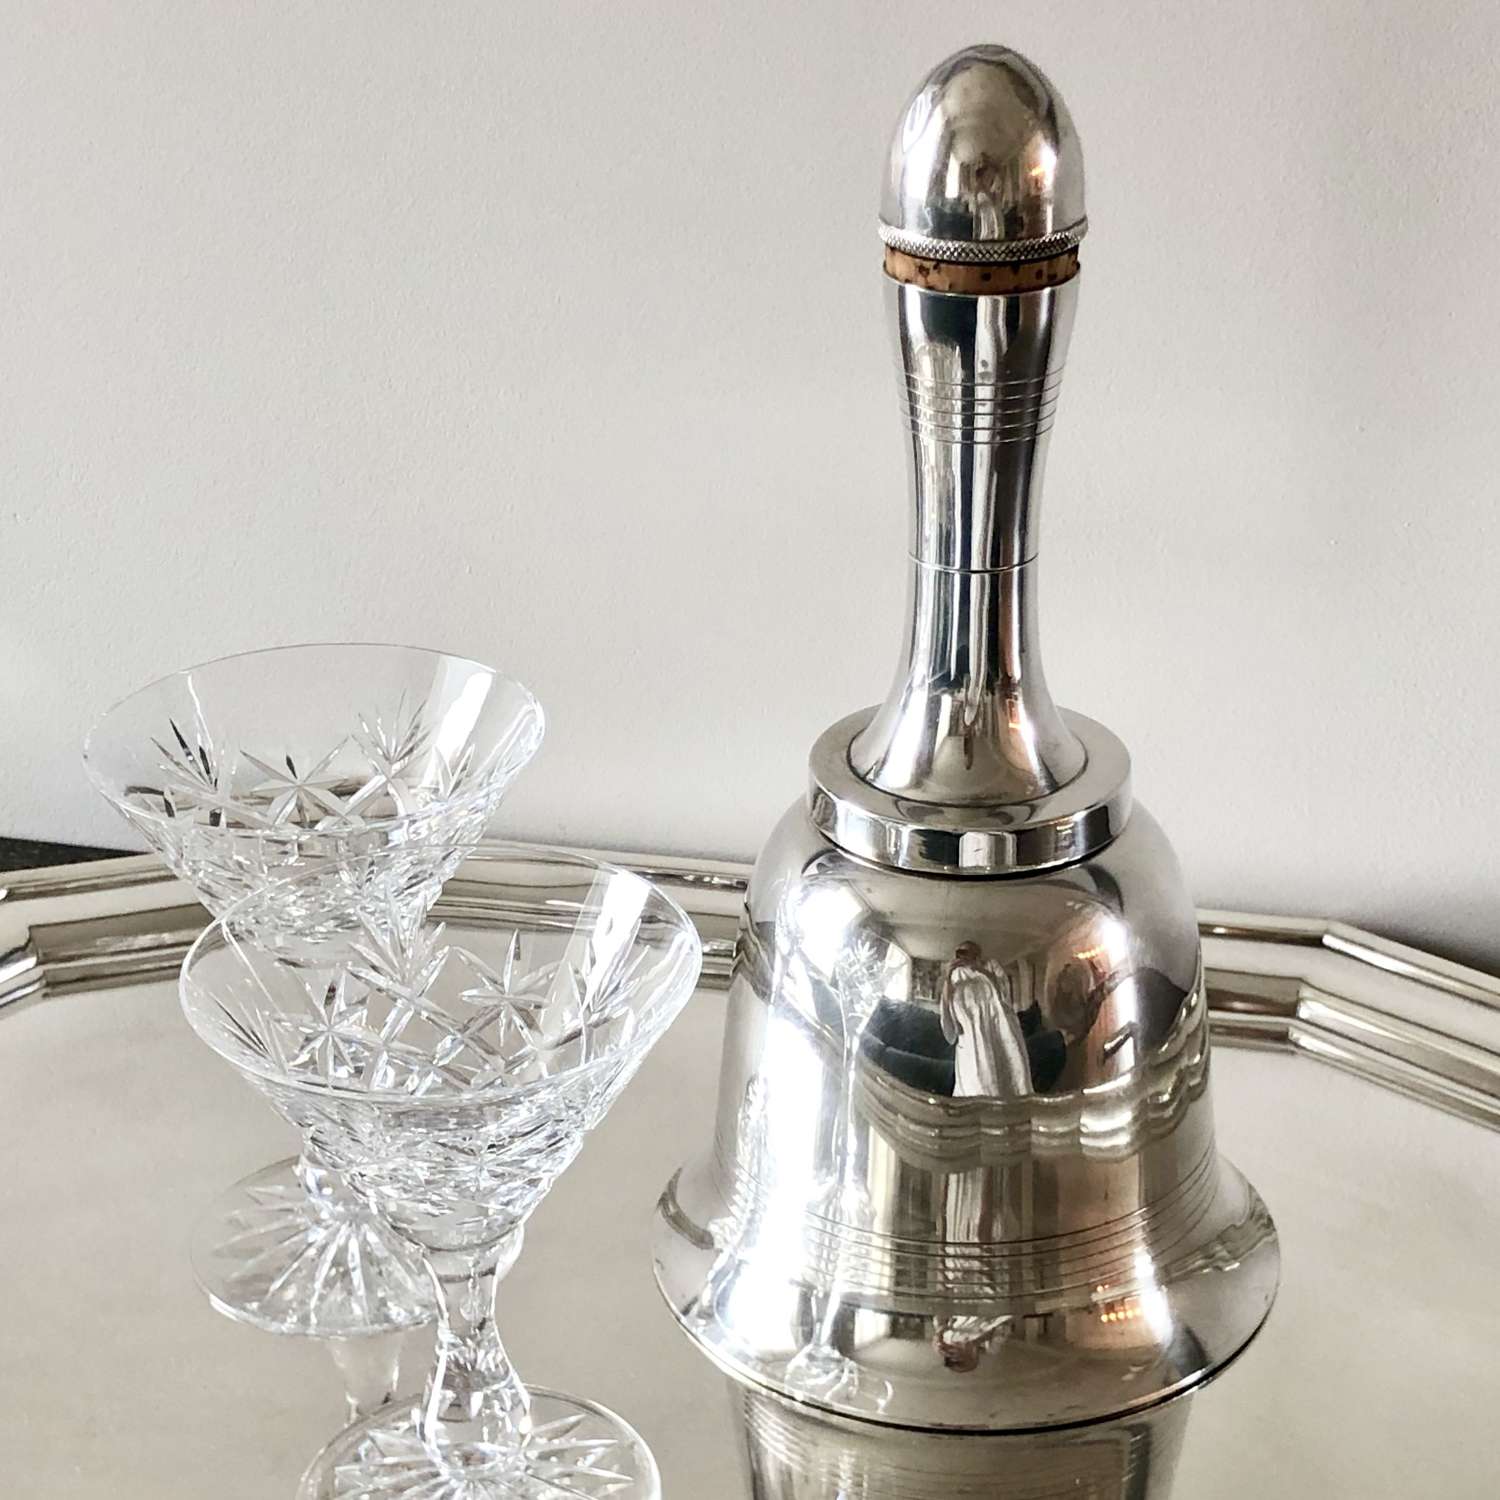 Iconic Asprey Art Deco Bell cocktail shaker